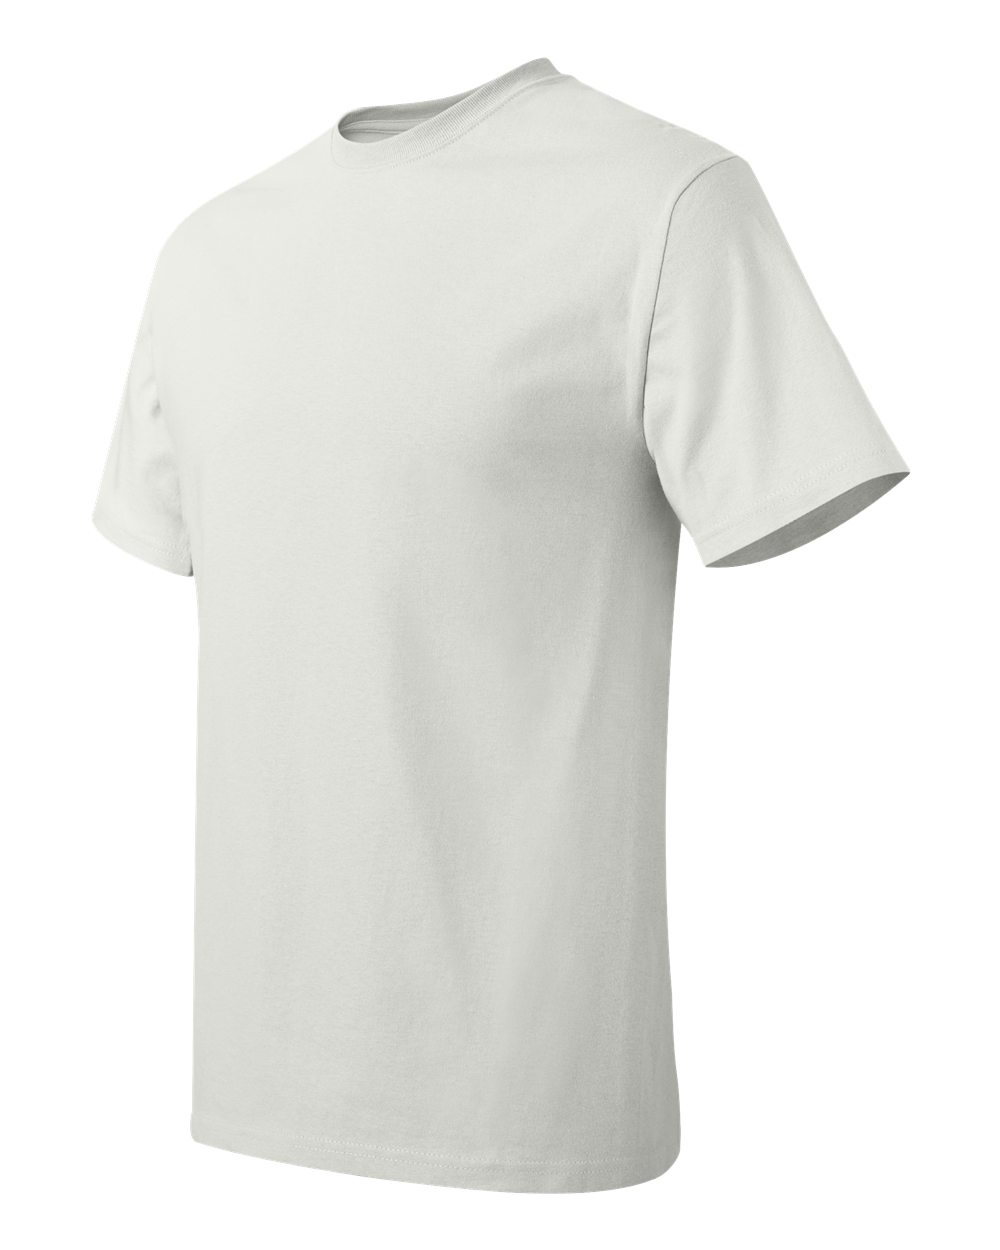 PACK OF 5 Hanes Plain Mens Black T Shirt S to XL Blank 5180 Wholesale T-Shirt